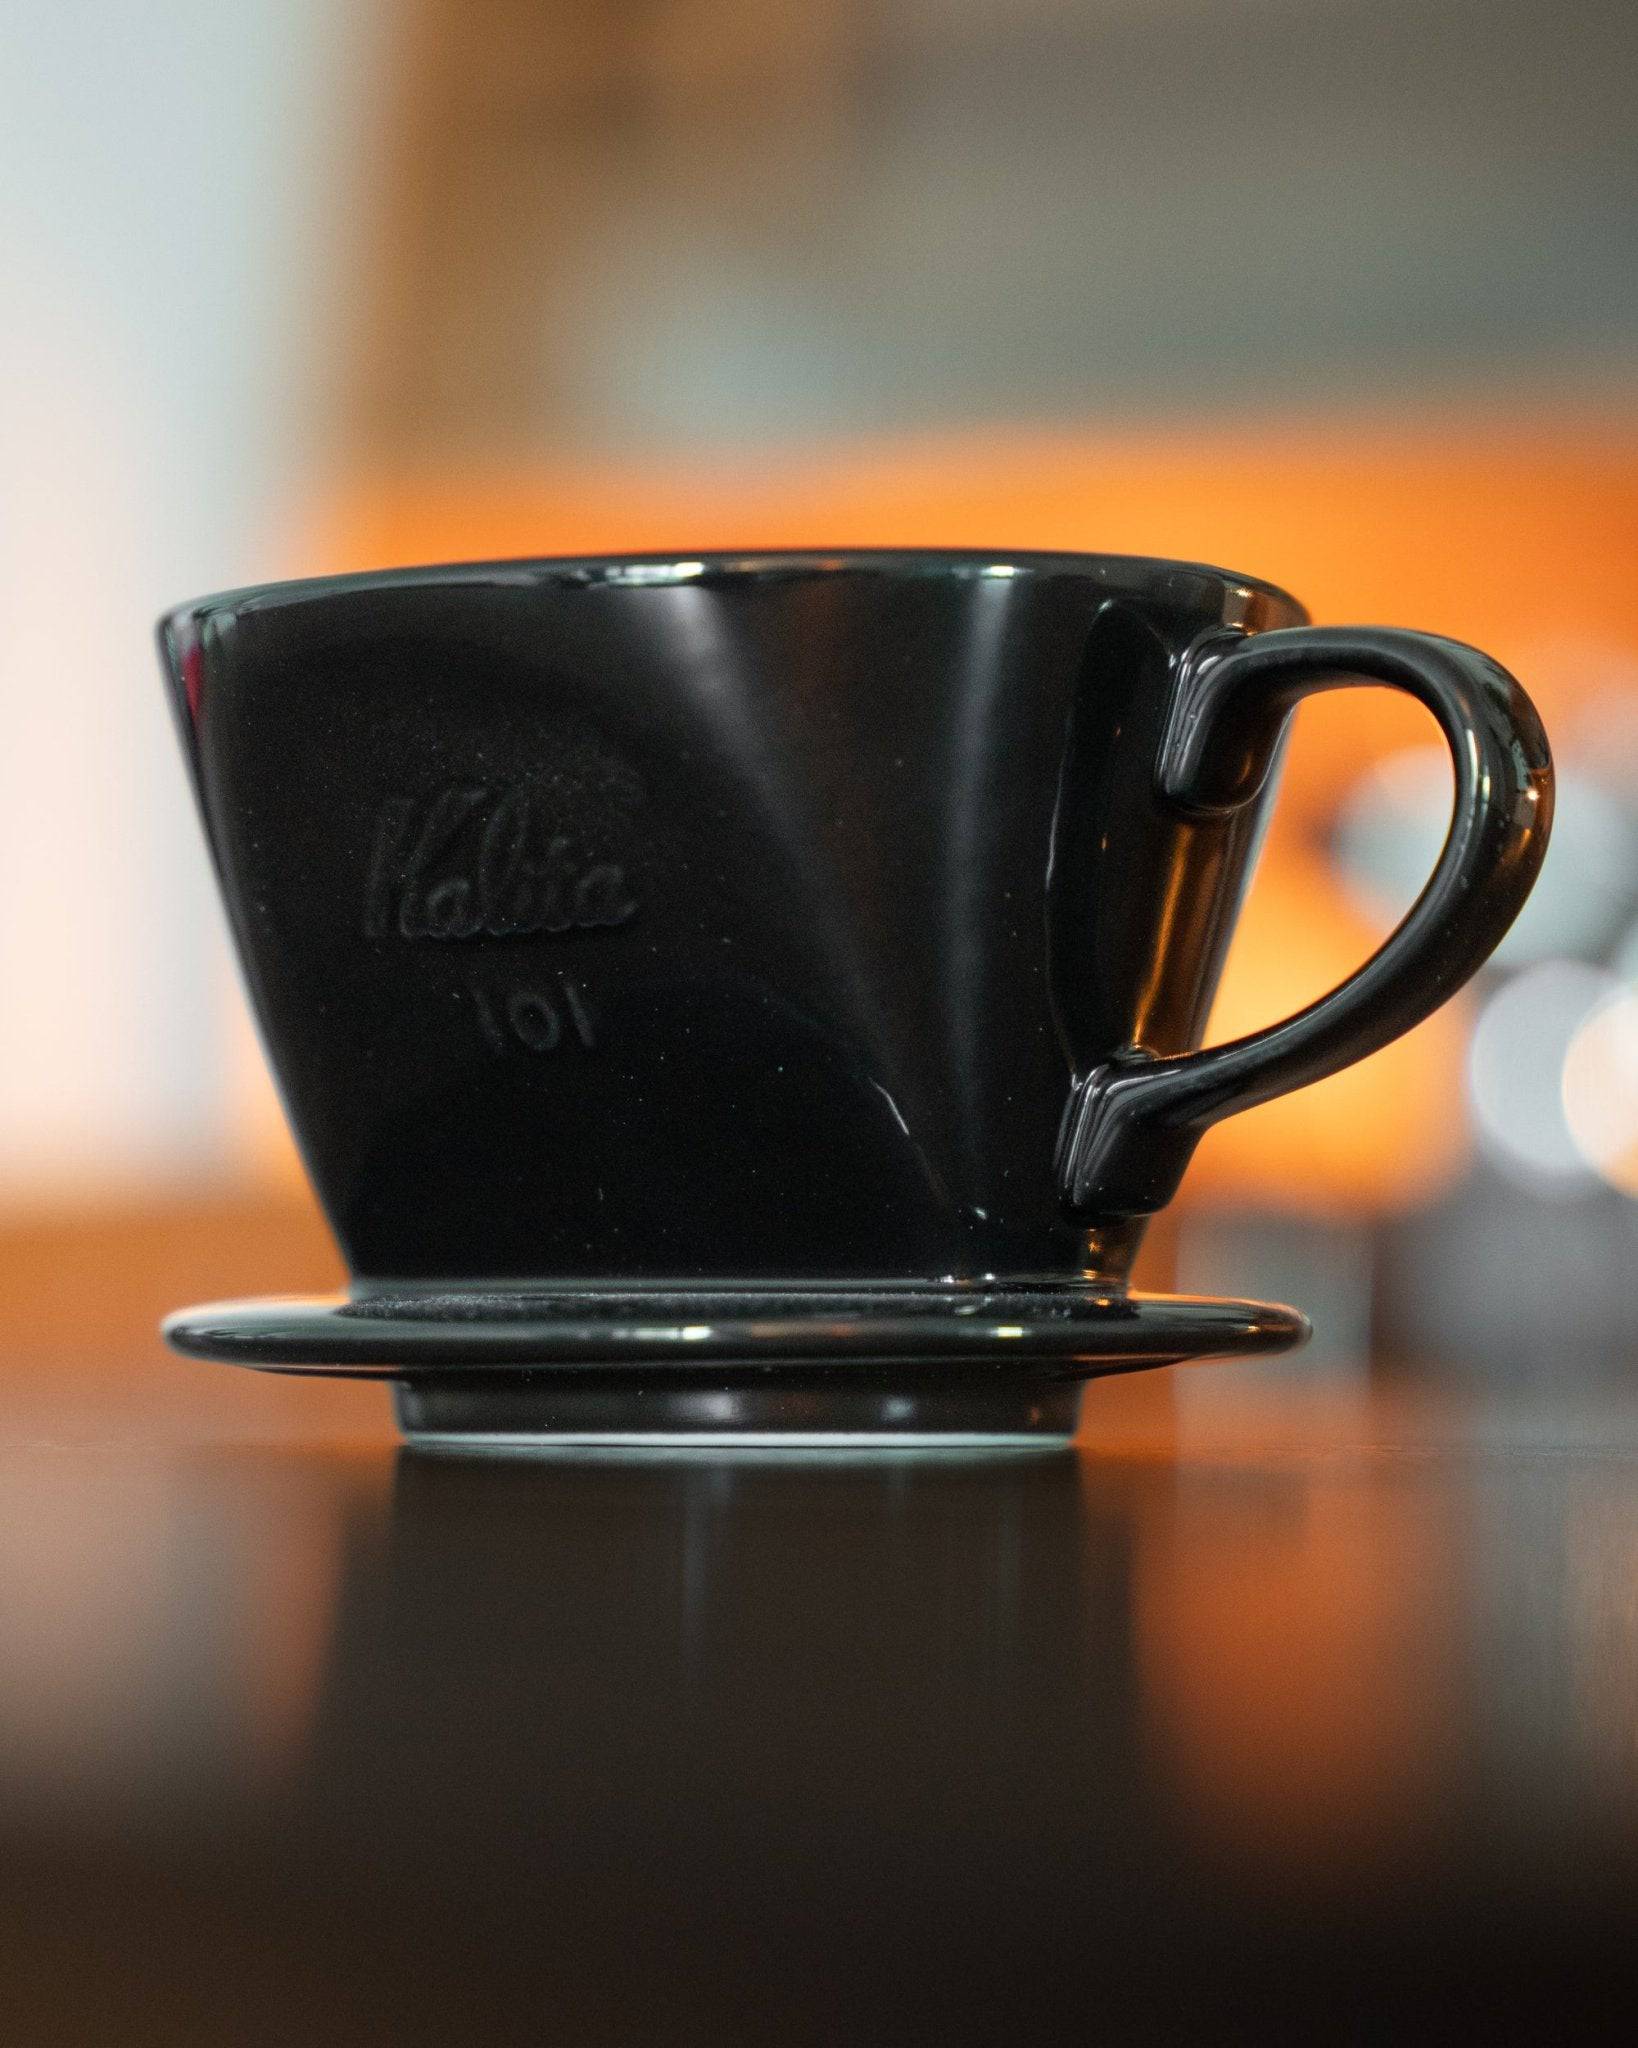 kalita 波佐見燒陶瓷濾杯 101（黑色）日本製造 - Coffee Stage 咖啡舞台